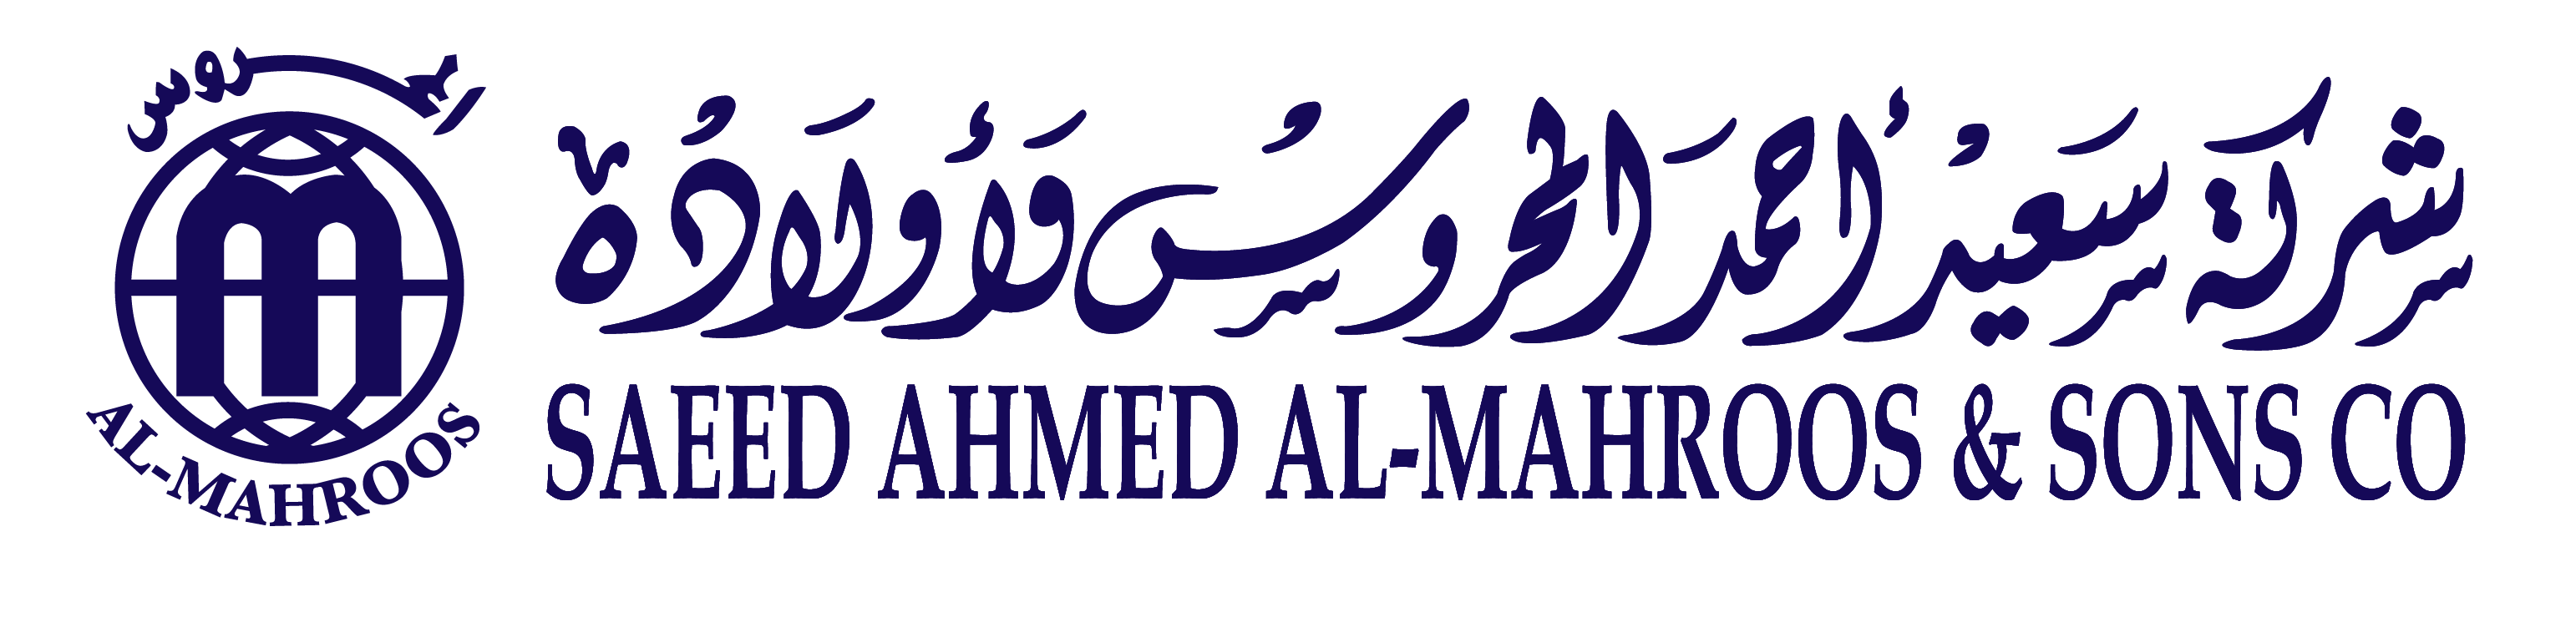 saeed ahmed al-mahroos & sons co